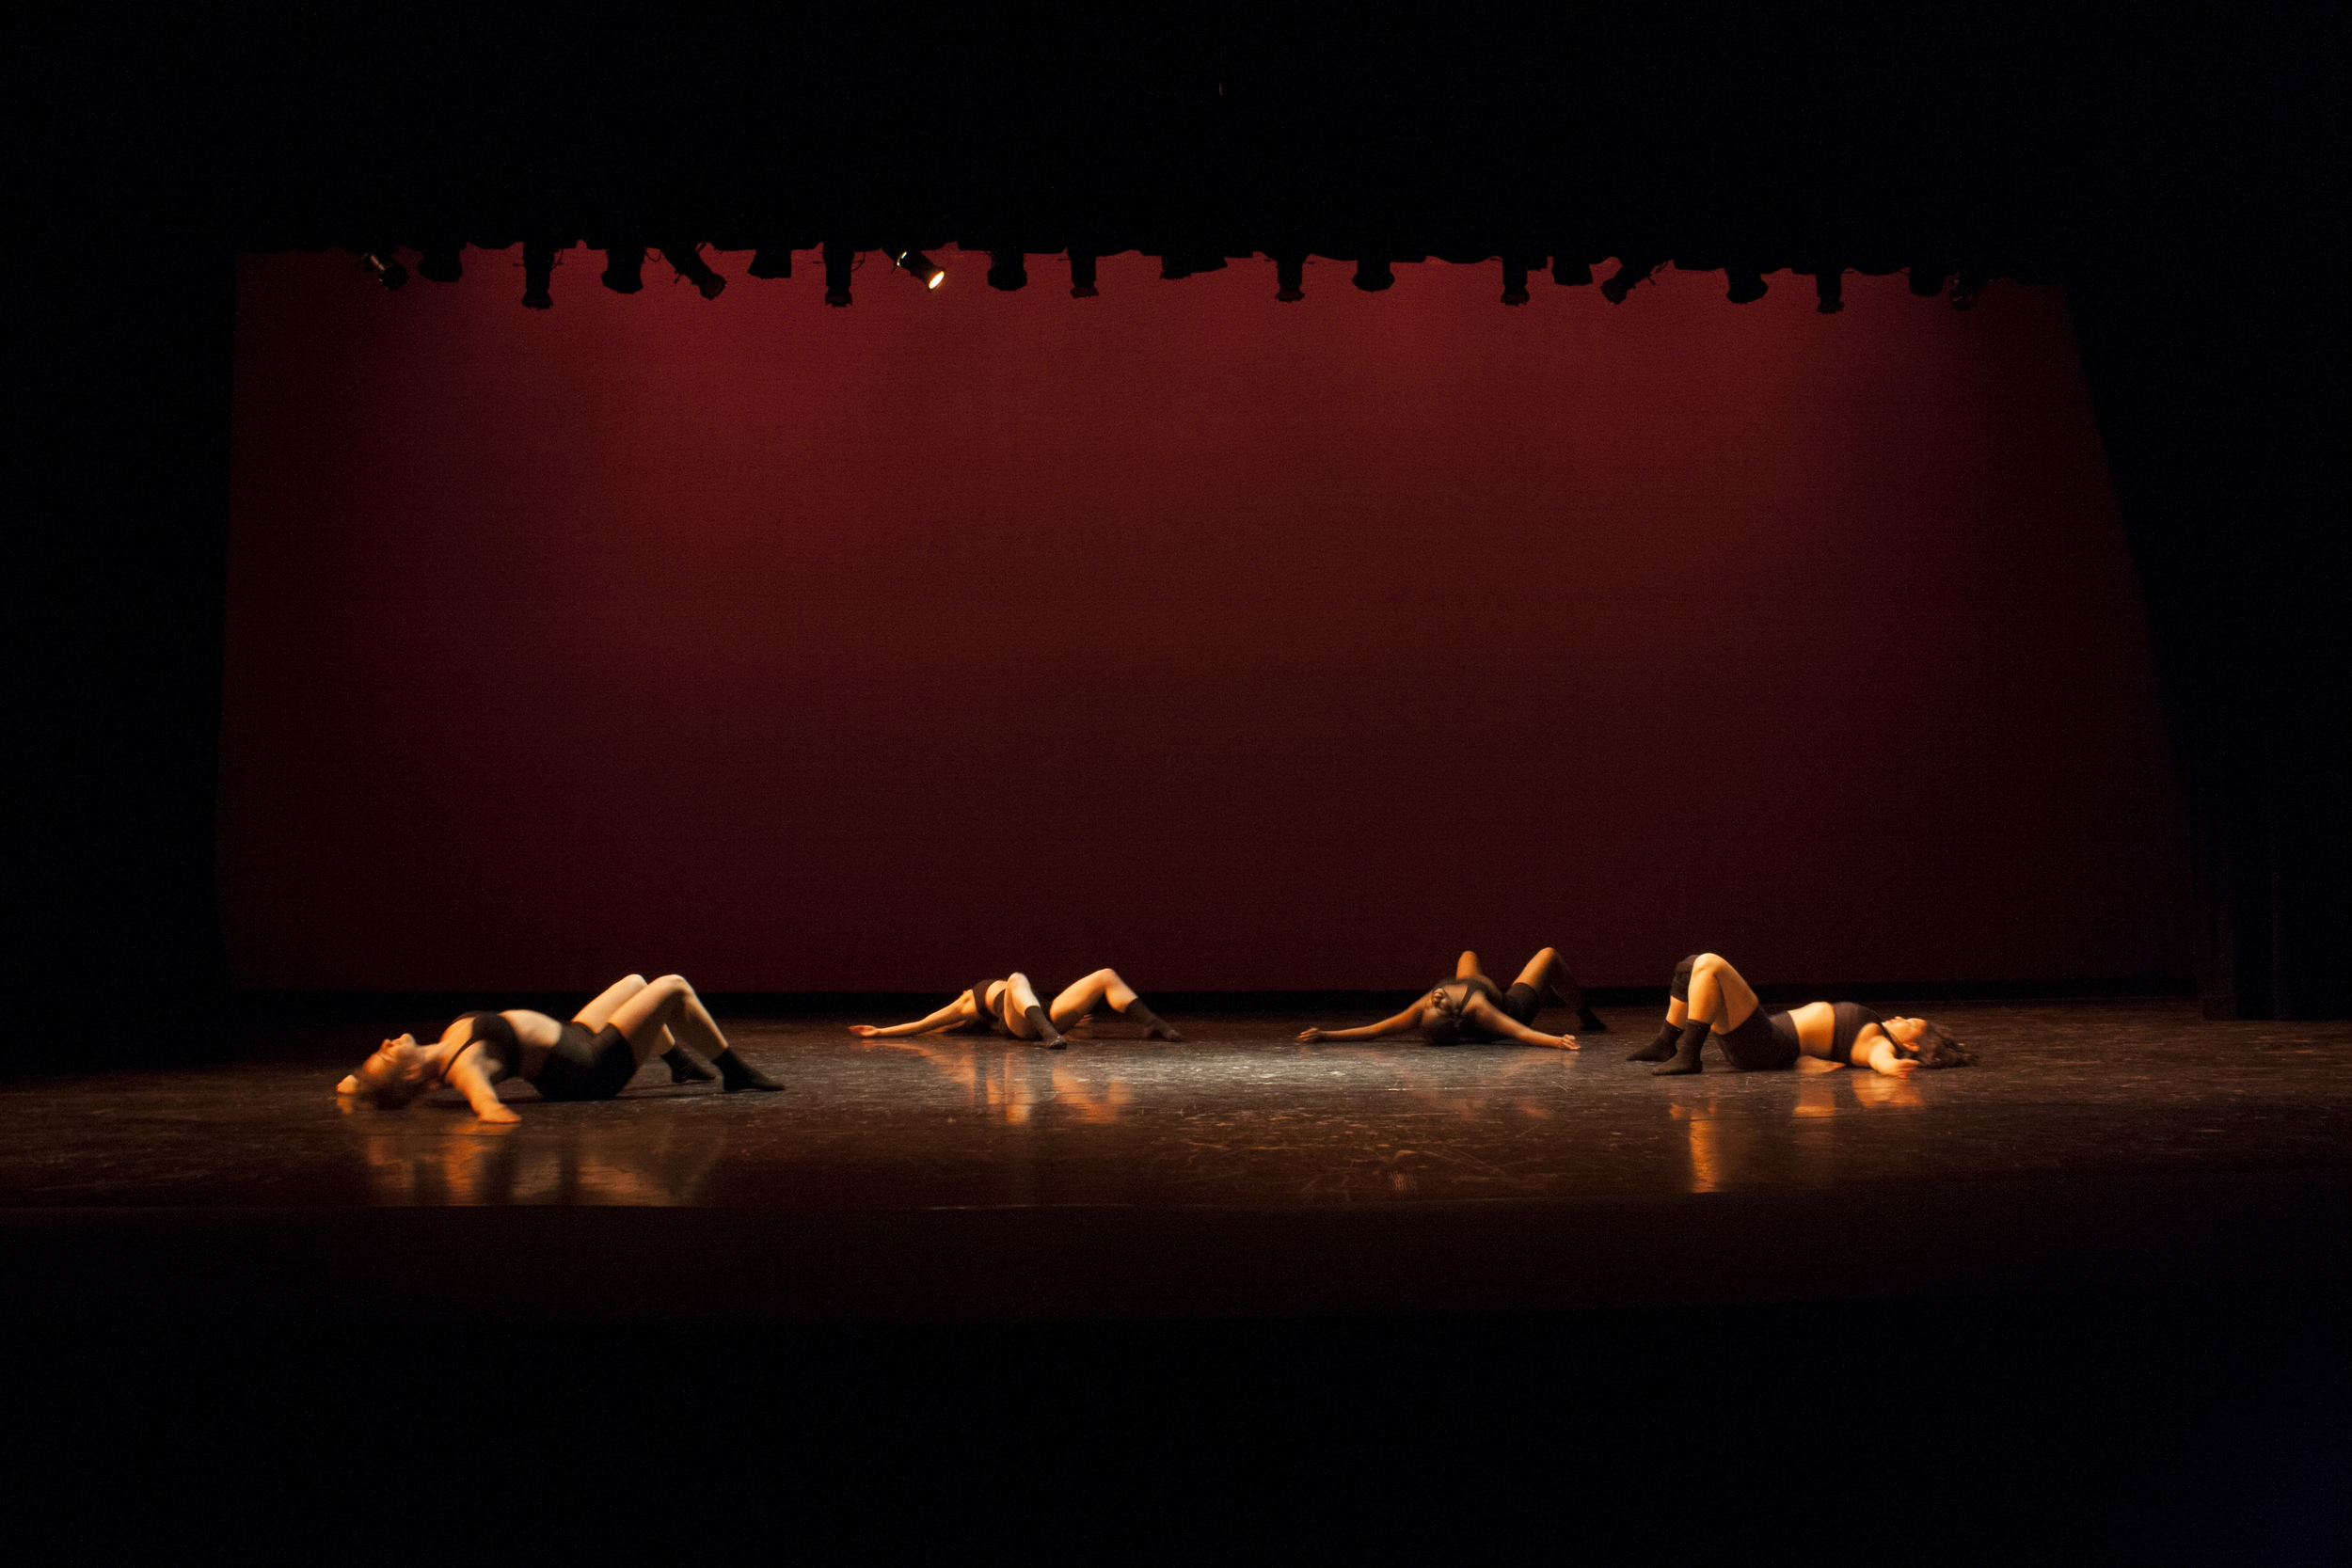   Student Choreograph Showcase 2015   Lighting Designer: Collin Lindgren  Photography: Theresa Kelly 